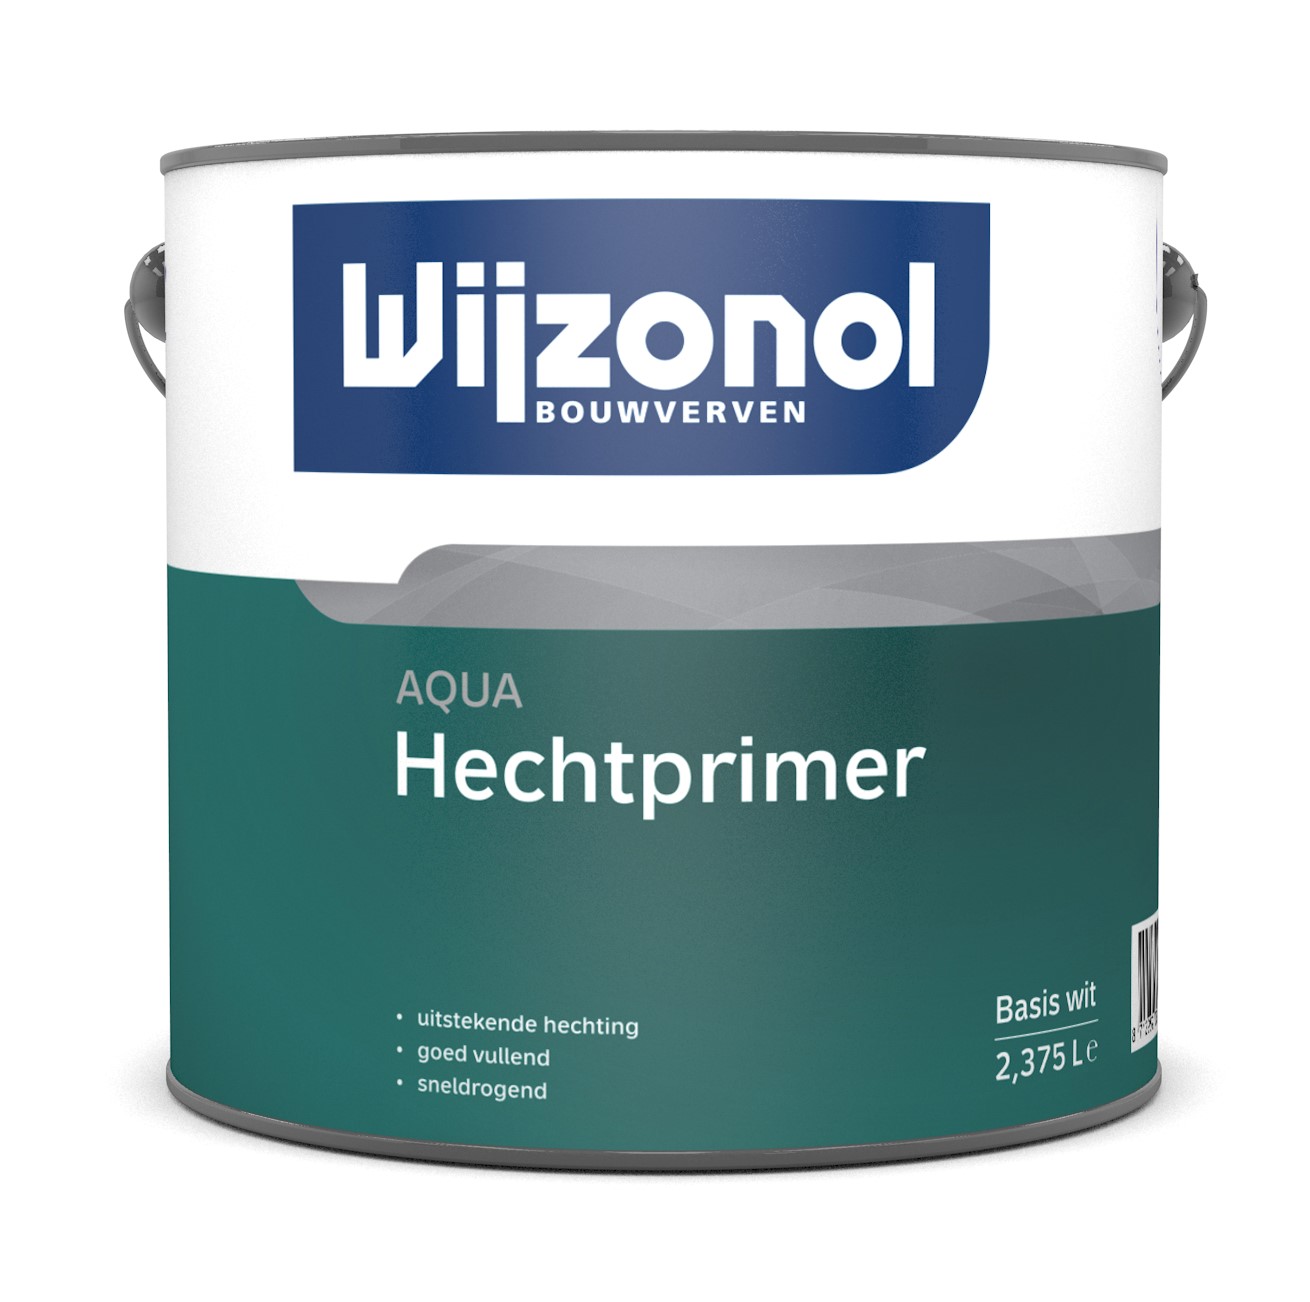 Wijzonol Aqua Hechtprimer